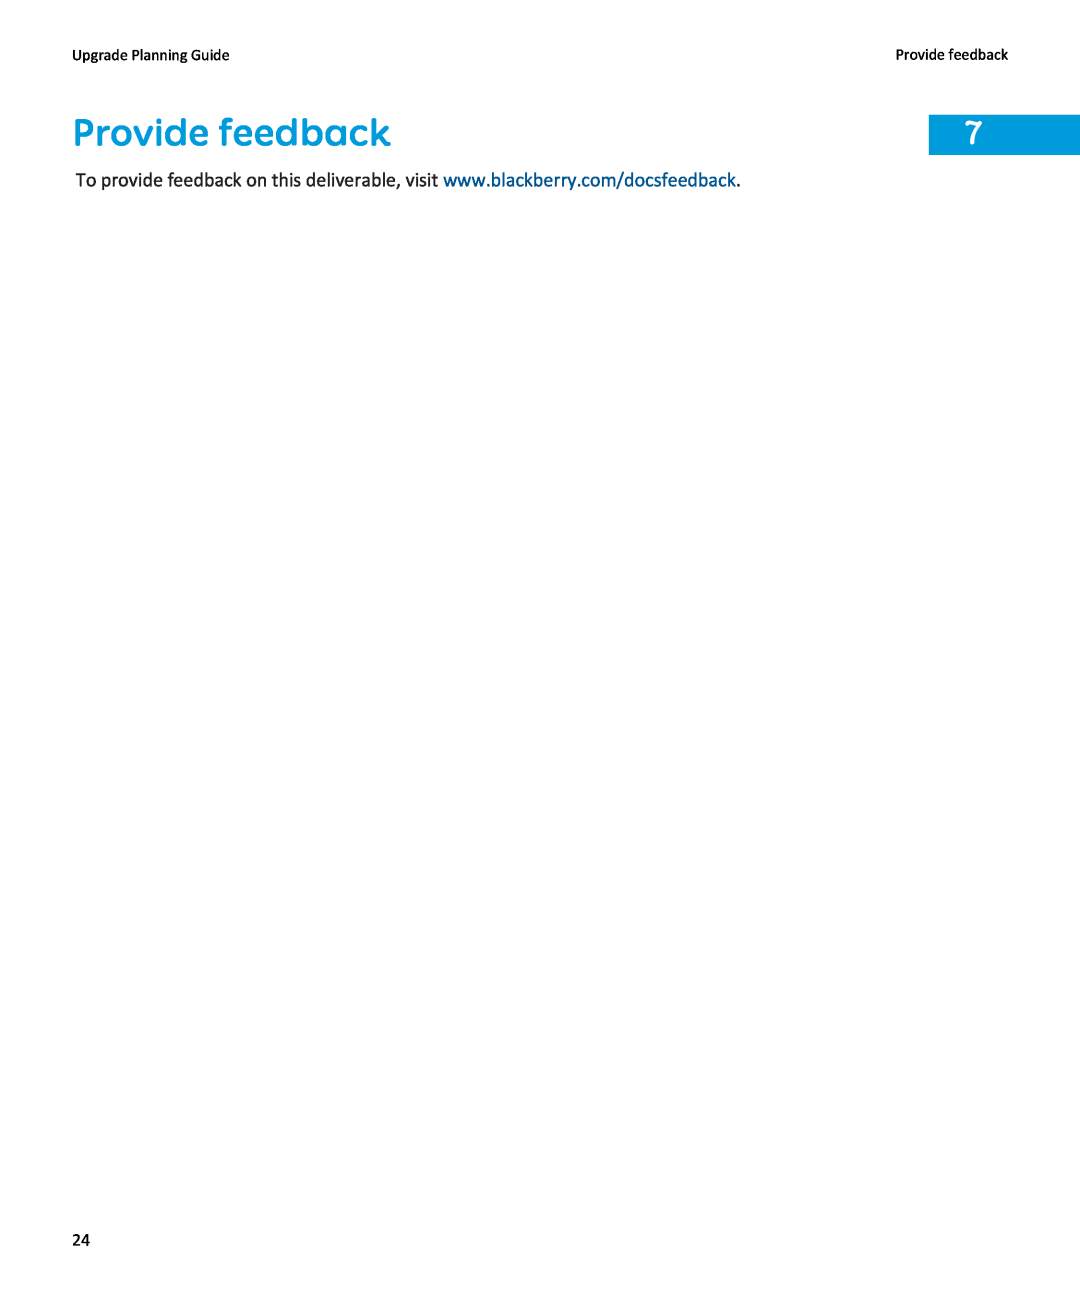 Blackberry blackberry enterprise server manual Provide feedback, Upgrade Planning Guide 